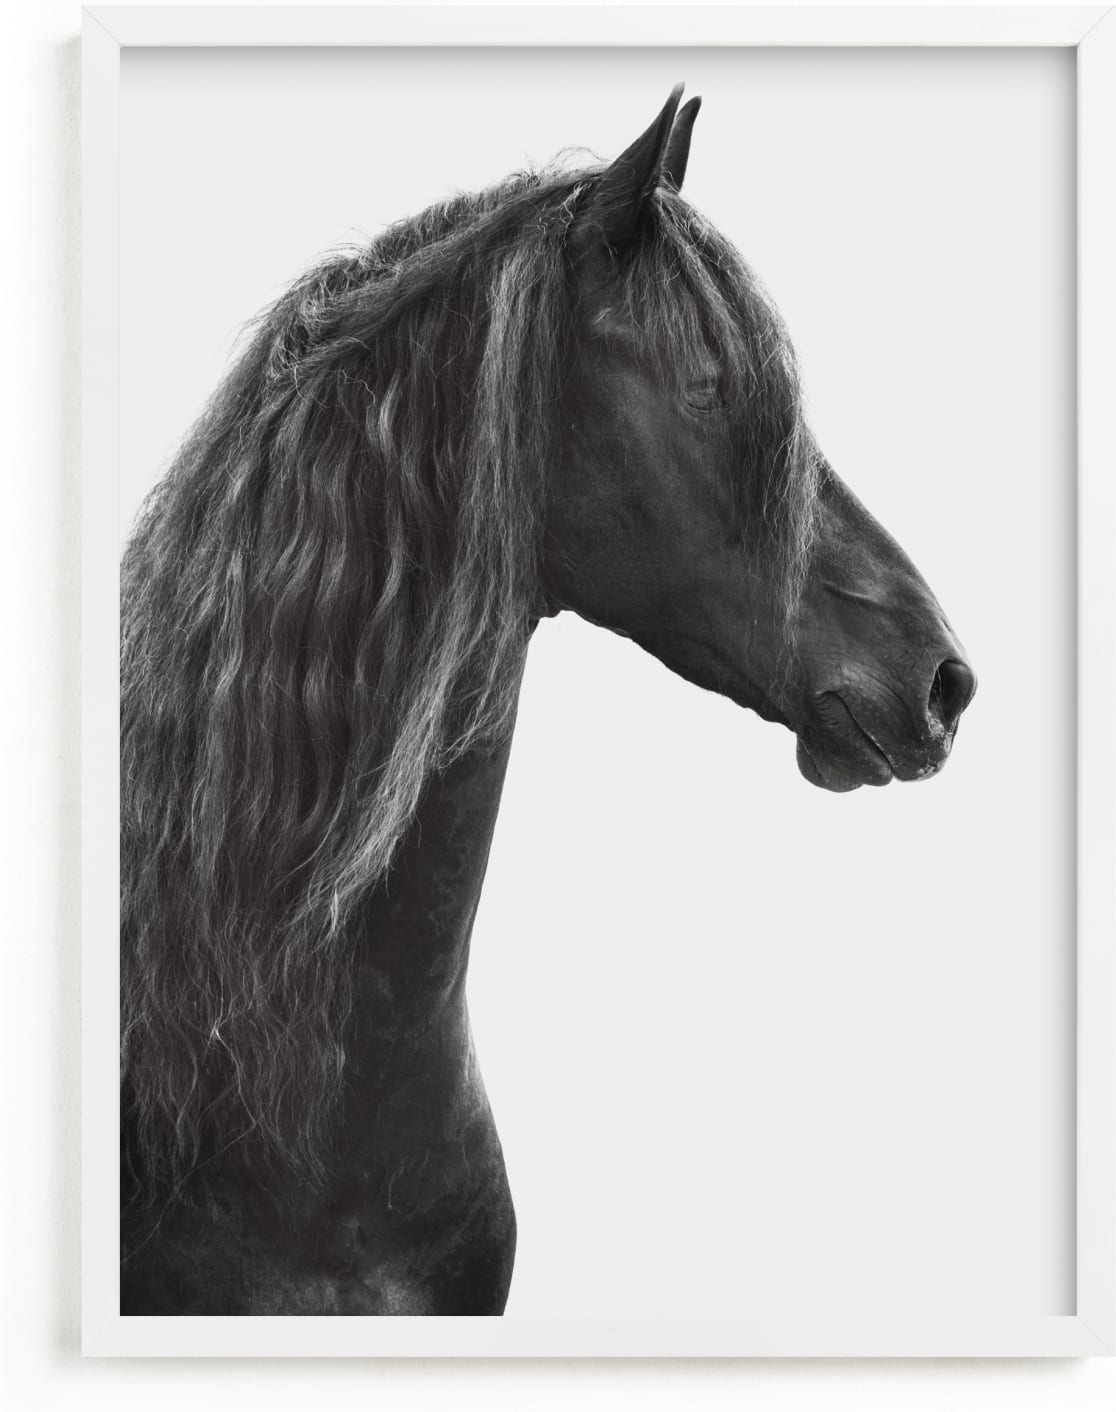 This is a black and white art by Irene Suchocki called Dark Horse.